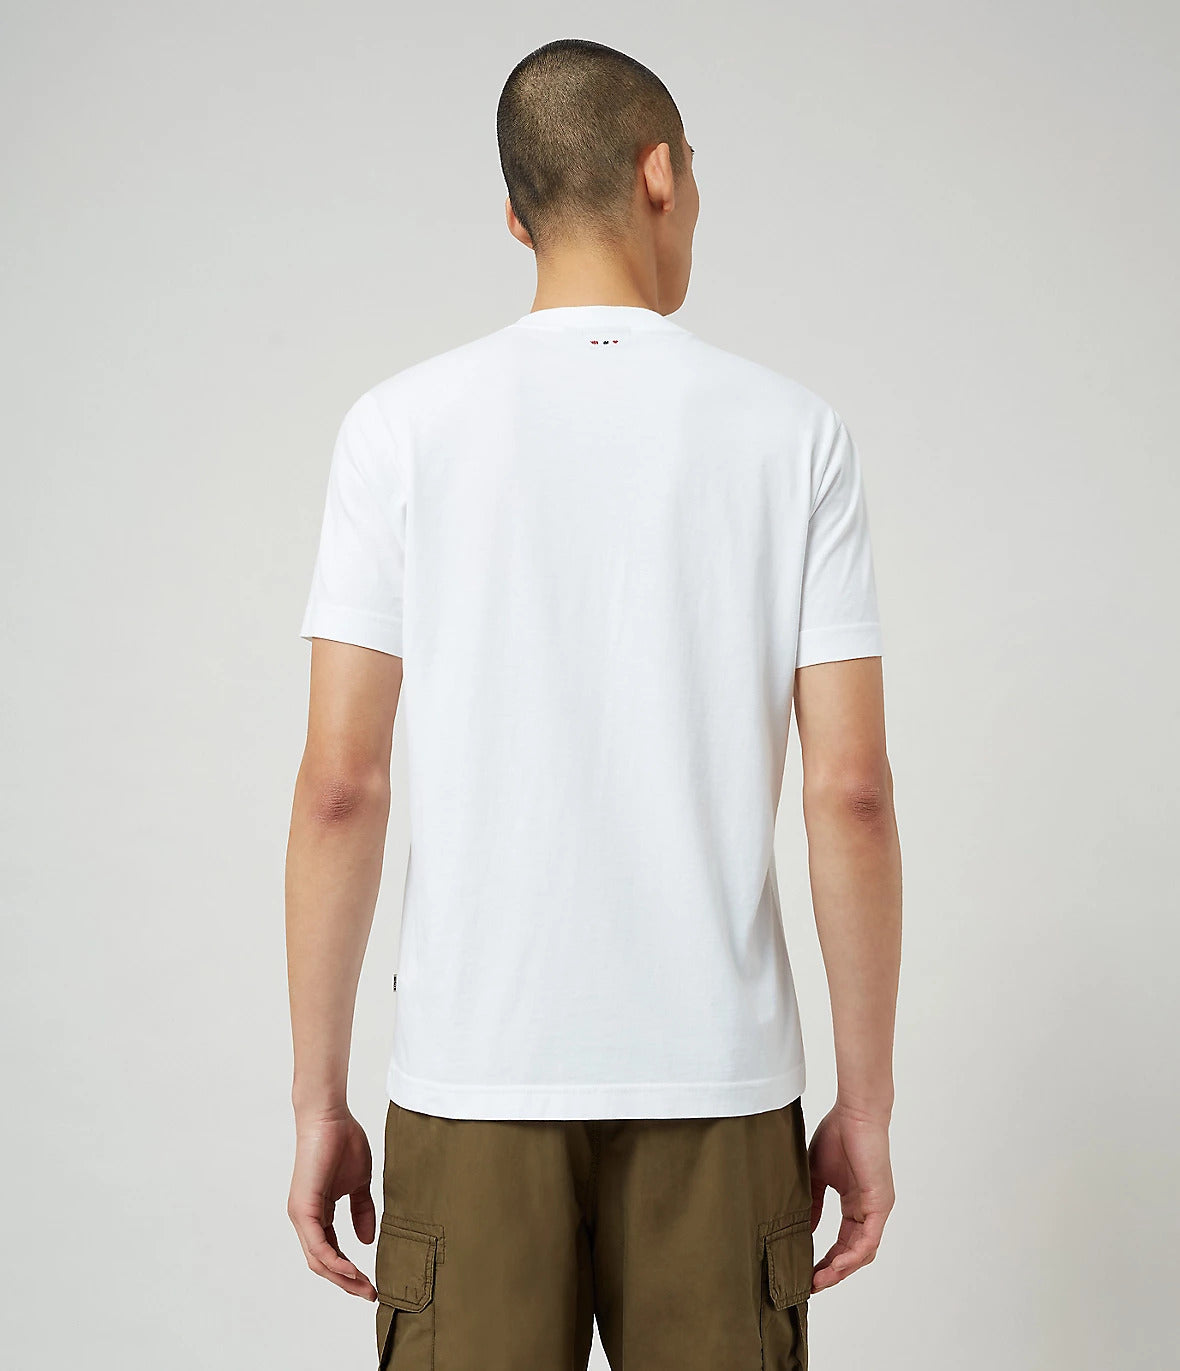 Napapijri Solanos Graphic T-Shirt in White